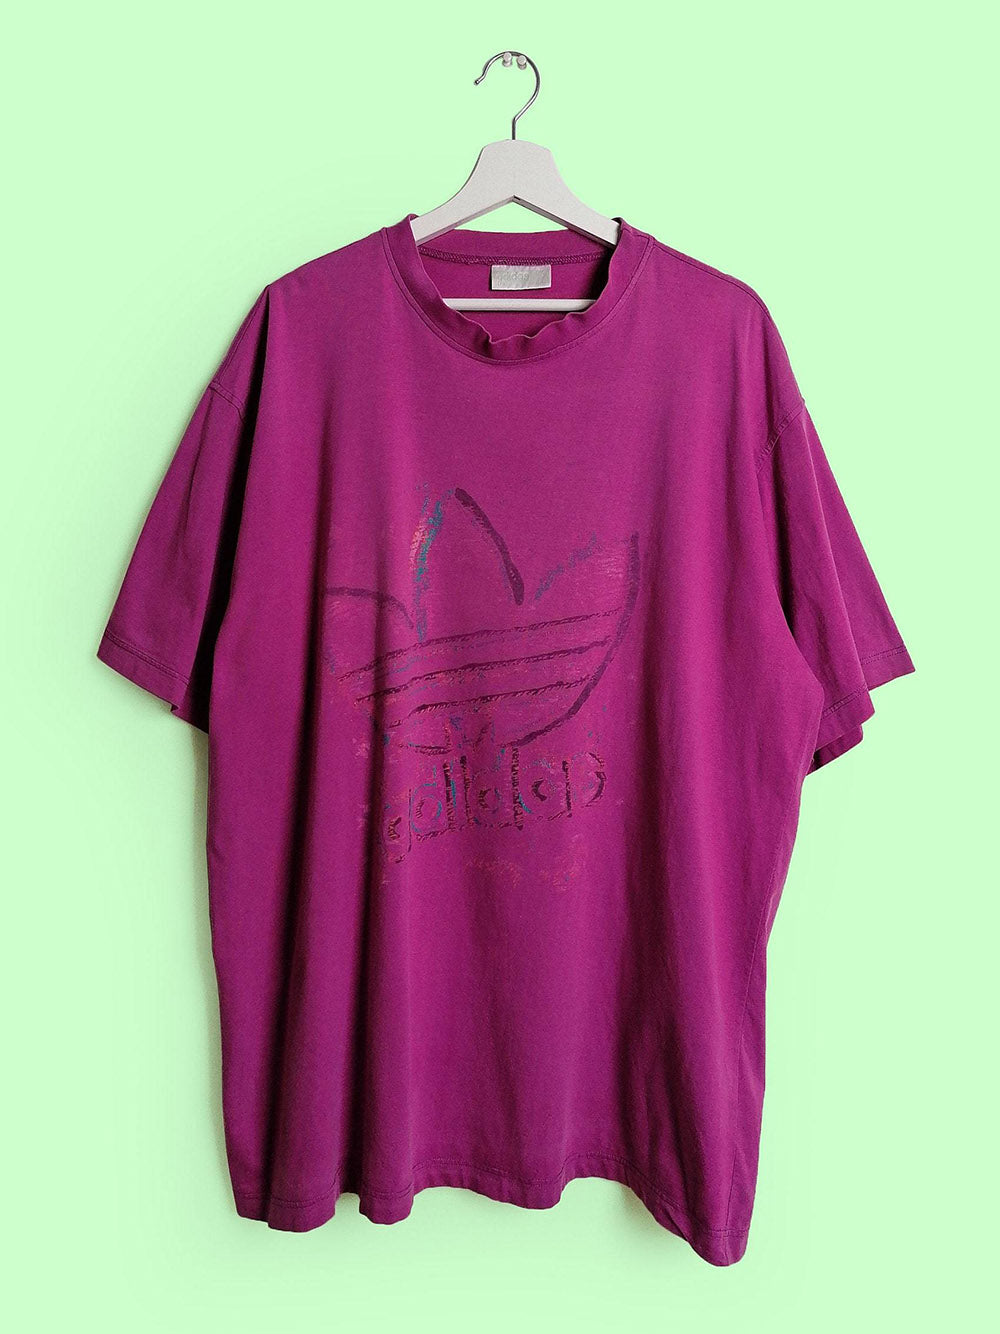 Vintage 90's ADIDAS Originals Unisex Oversized T-shirt - size XL